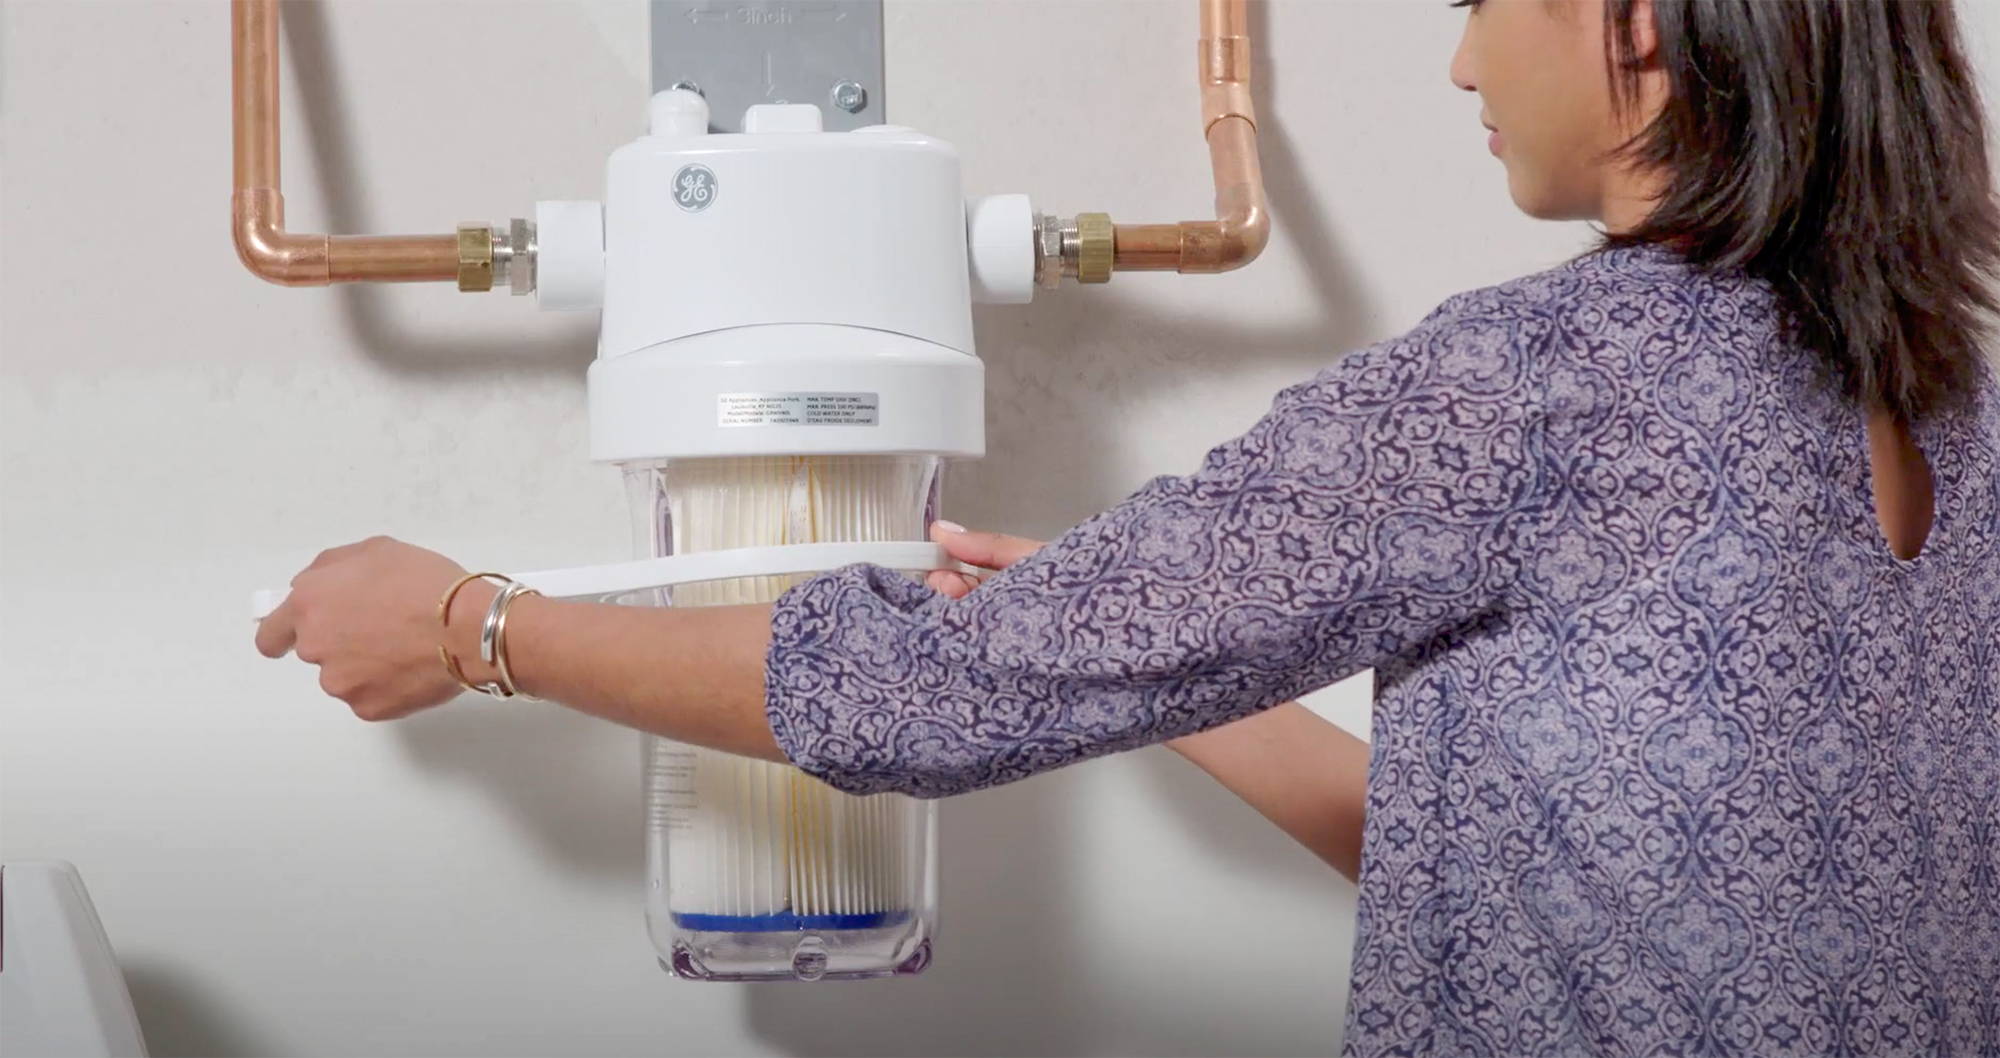 Women replacing her GE home water filter